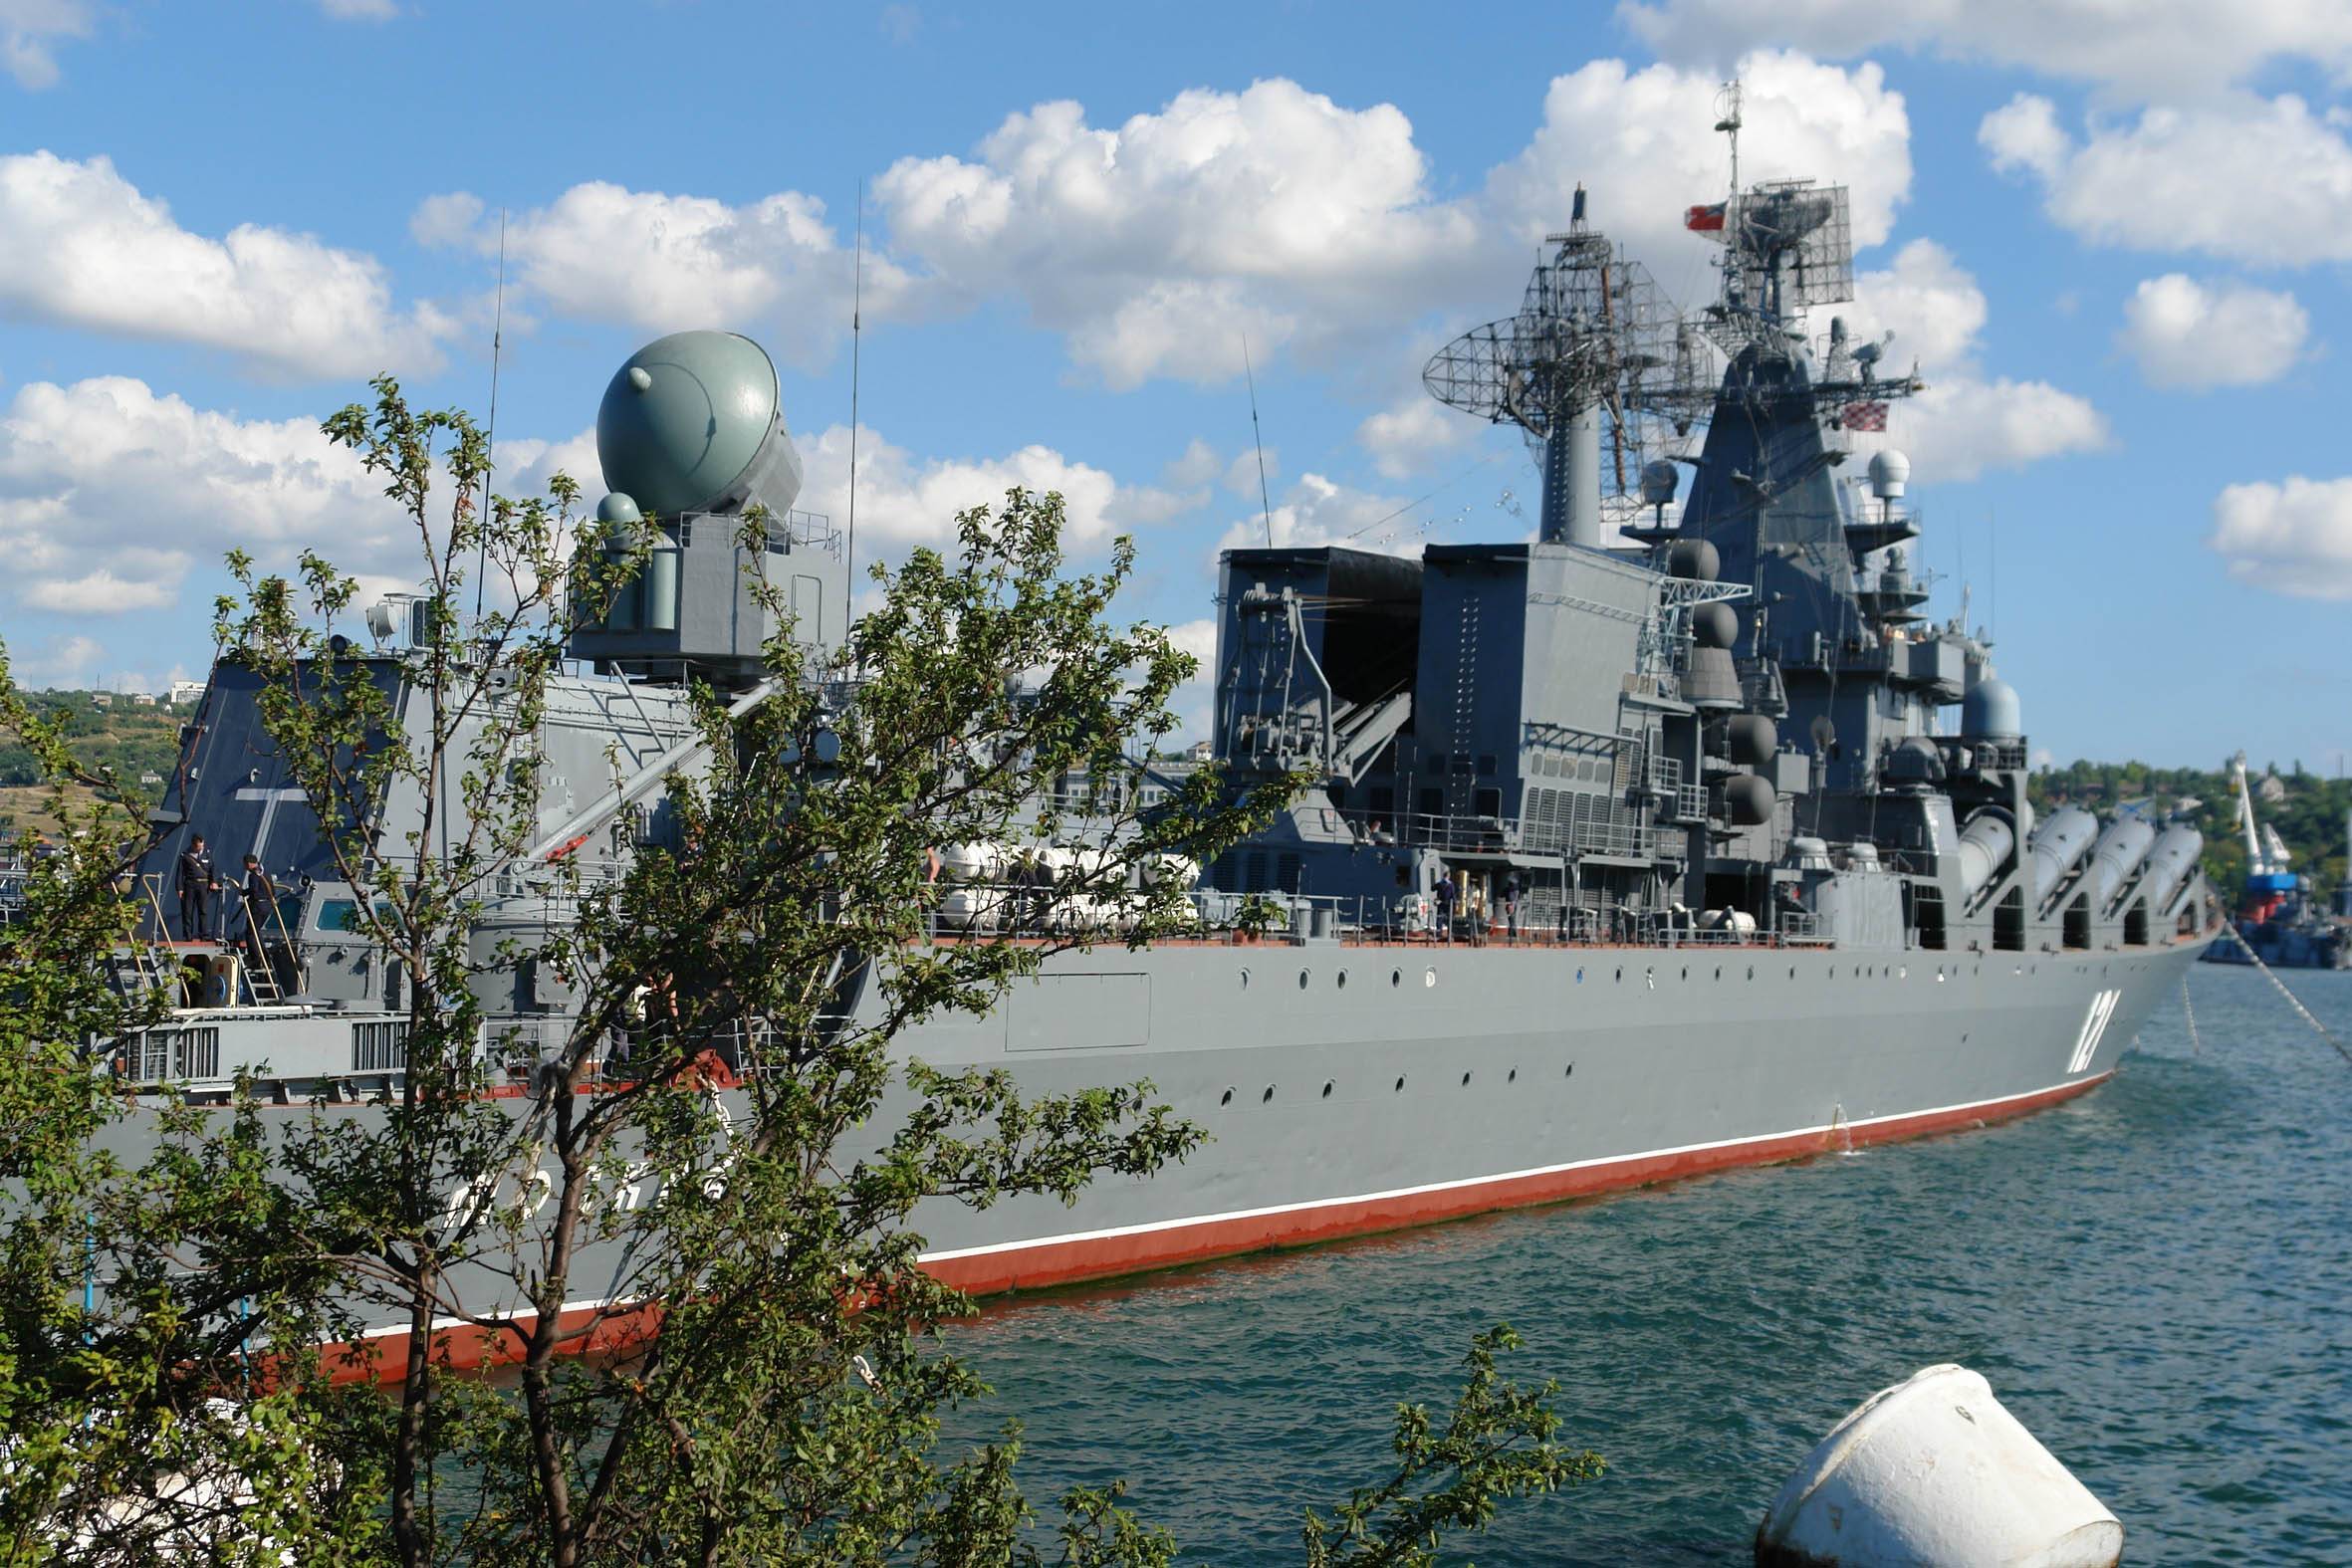 Крейсер «Москва» — боевой флагман Черноморского флота